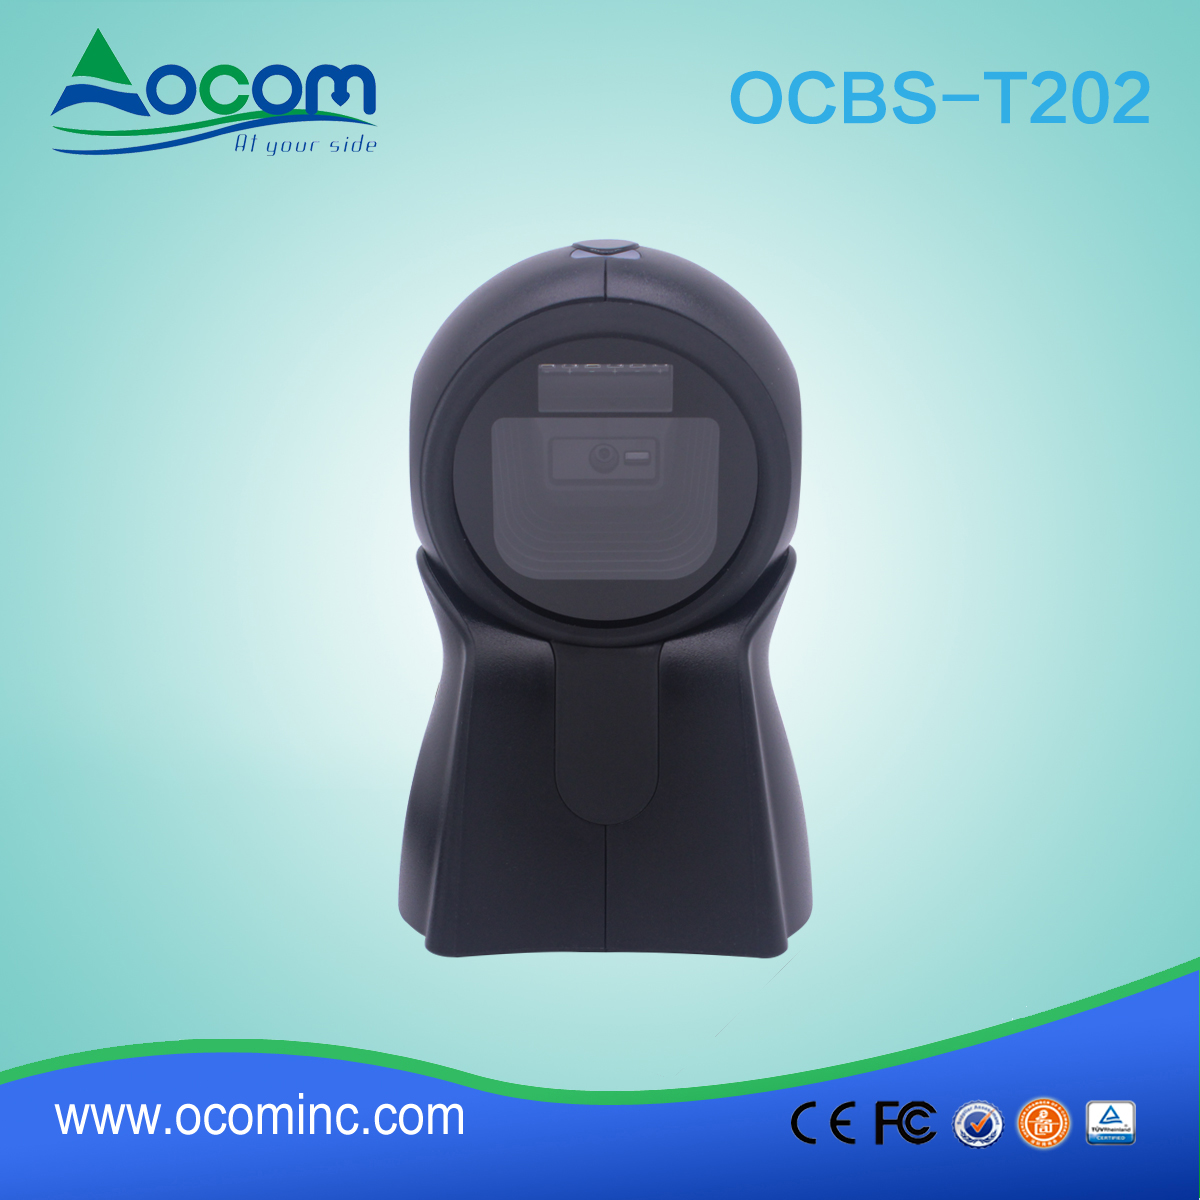 OCBS-T202 Image 2D QR Code Omni Directional Barcode Scanner